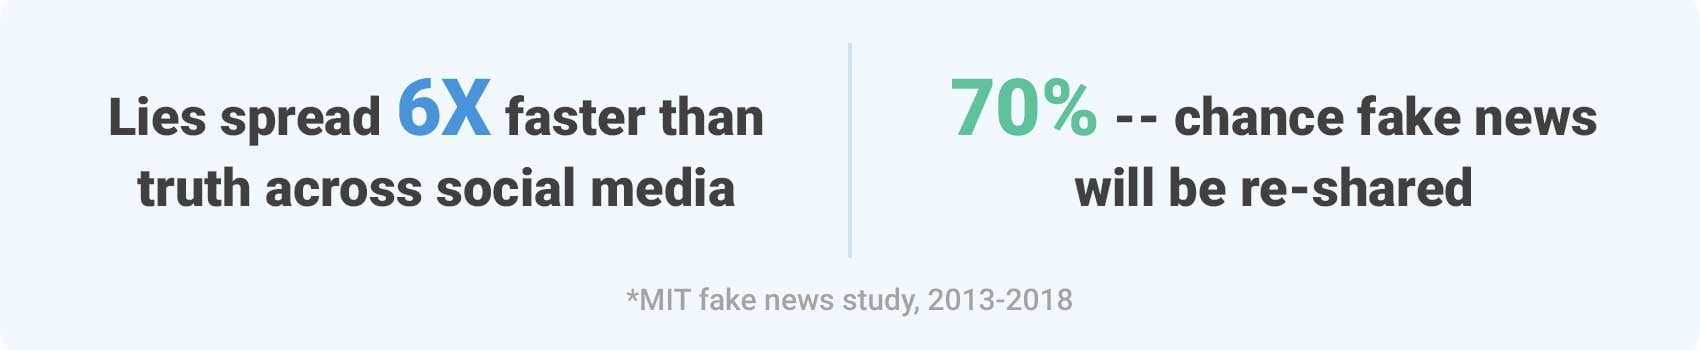 fake-news-stats